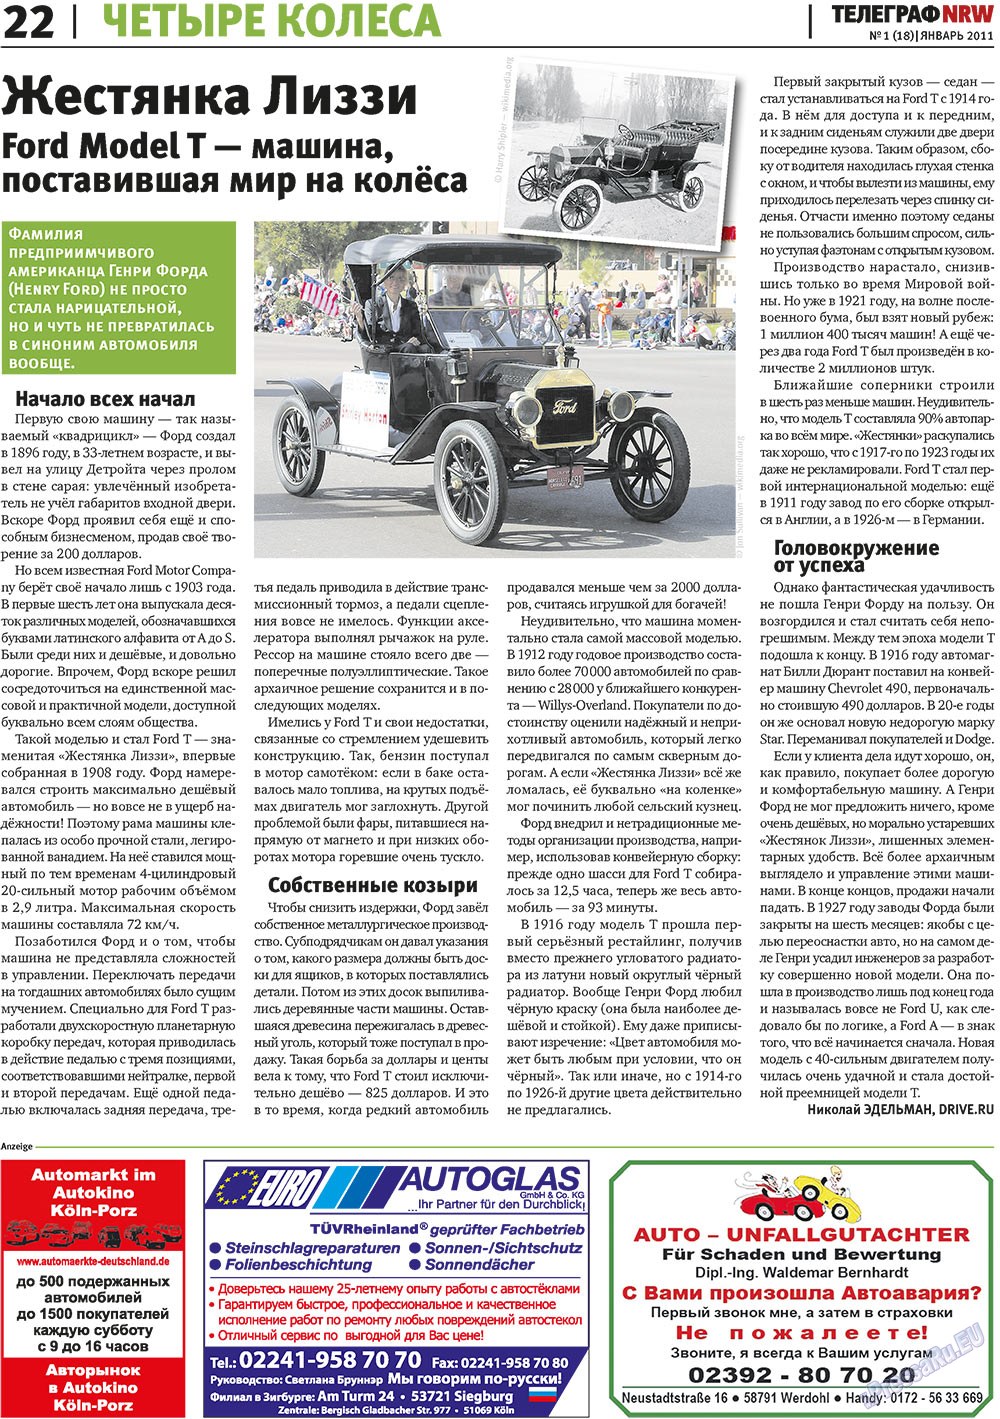 Телеграф NRW, газета. 2011 №1 стр.22